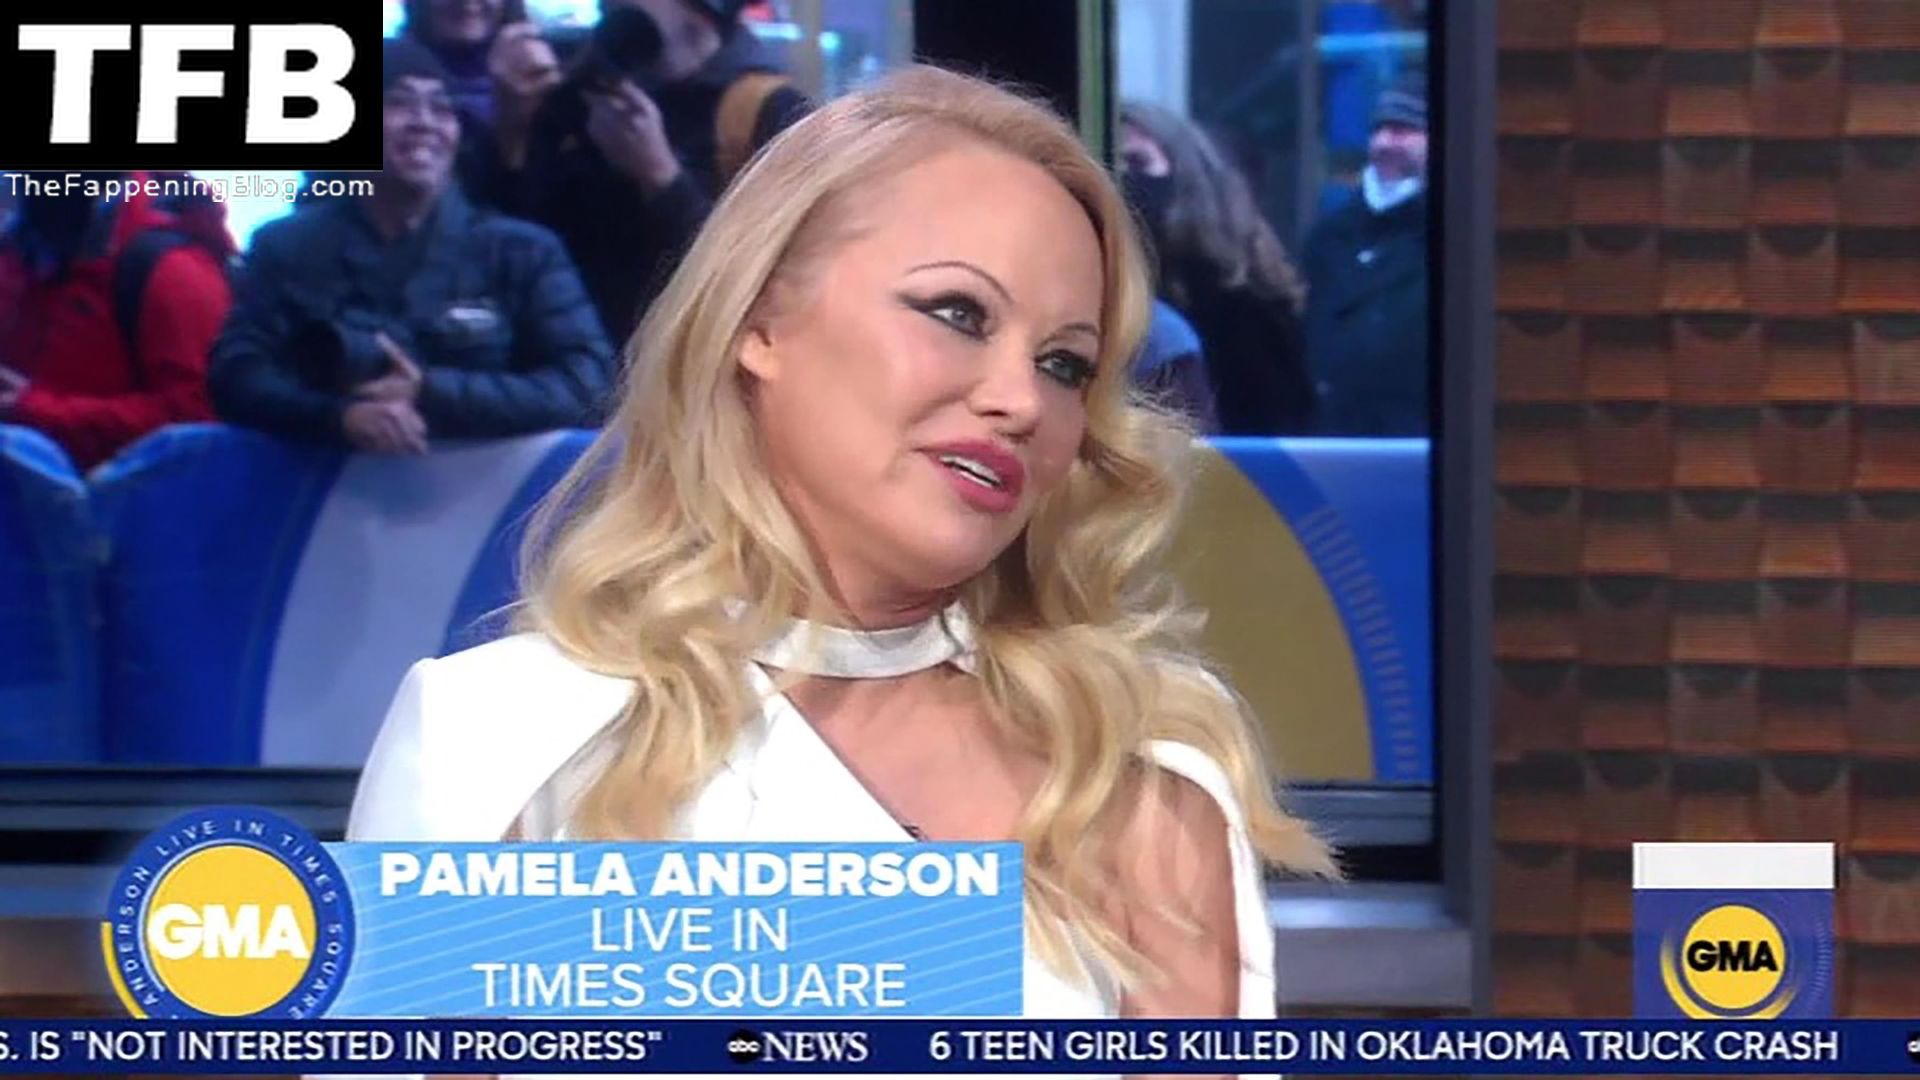 Pamela-Anderson-Hot-The-Fappening-Blog-8.jpg